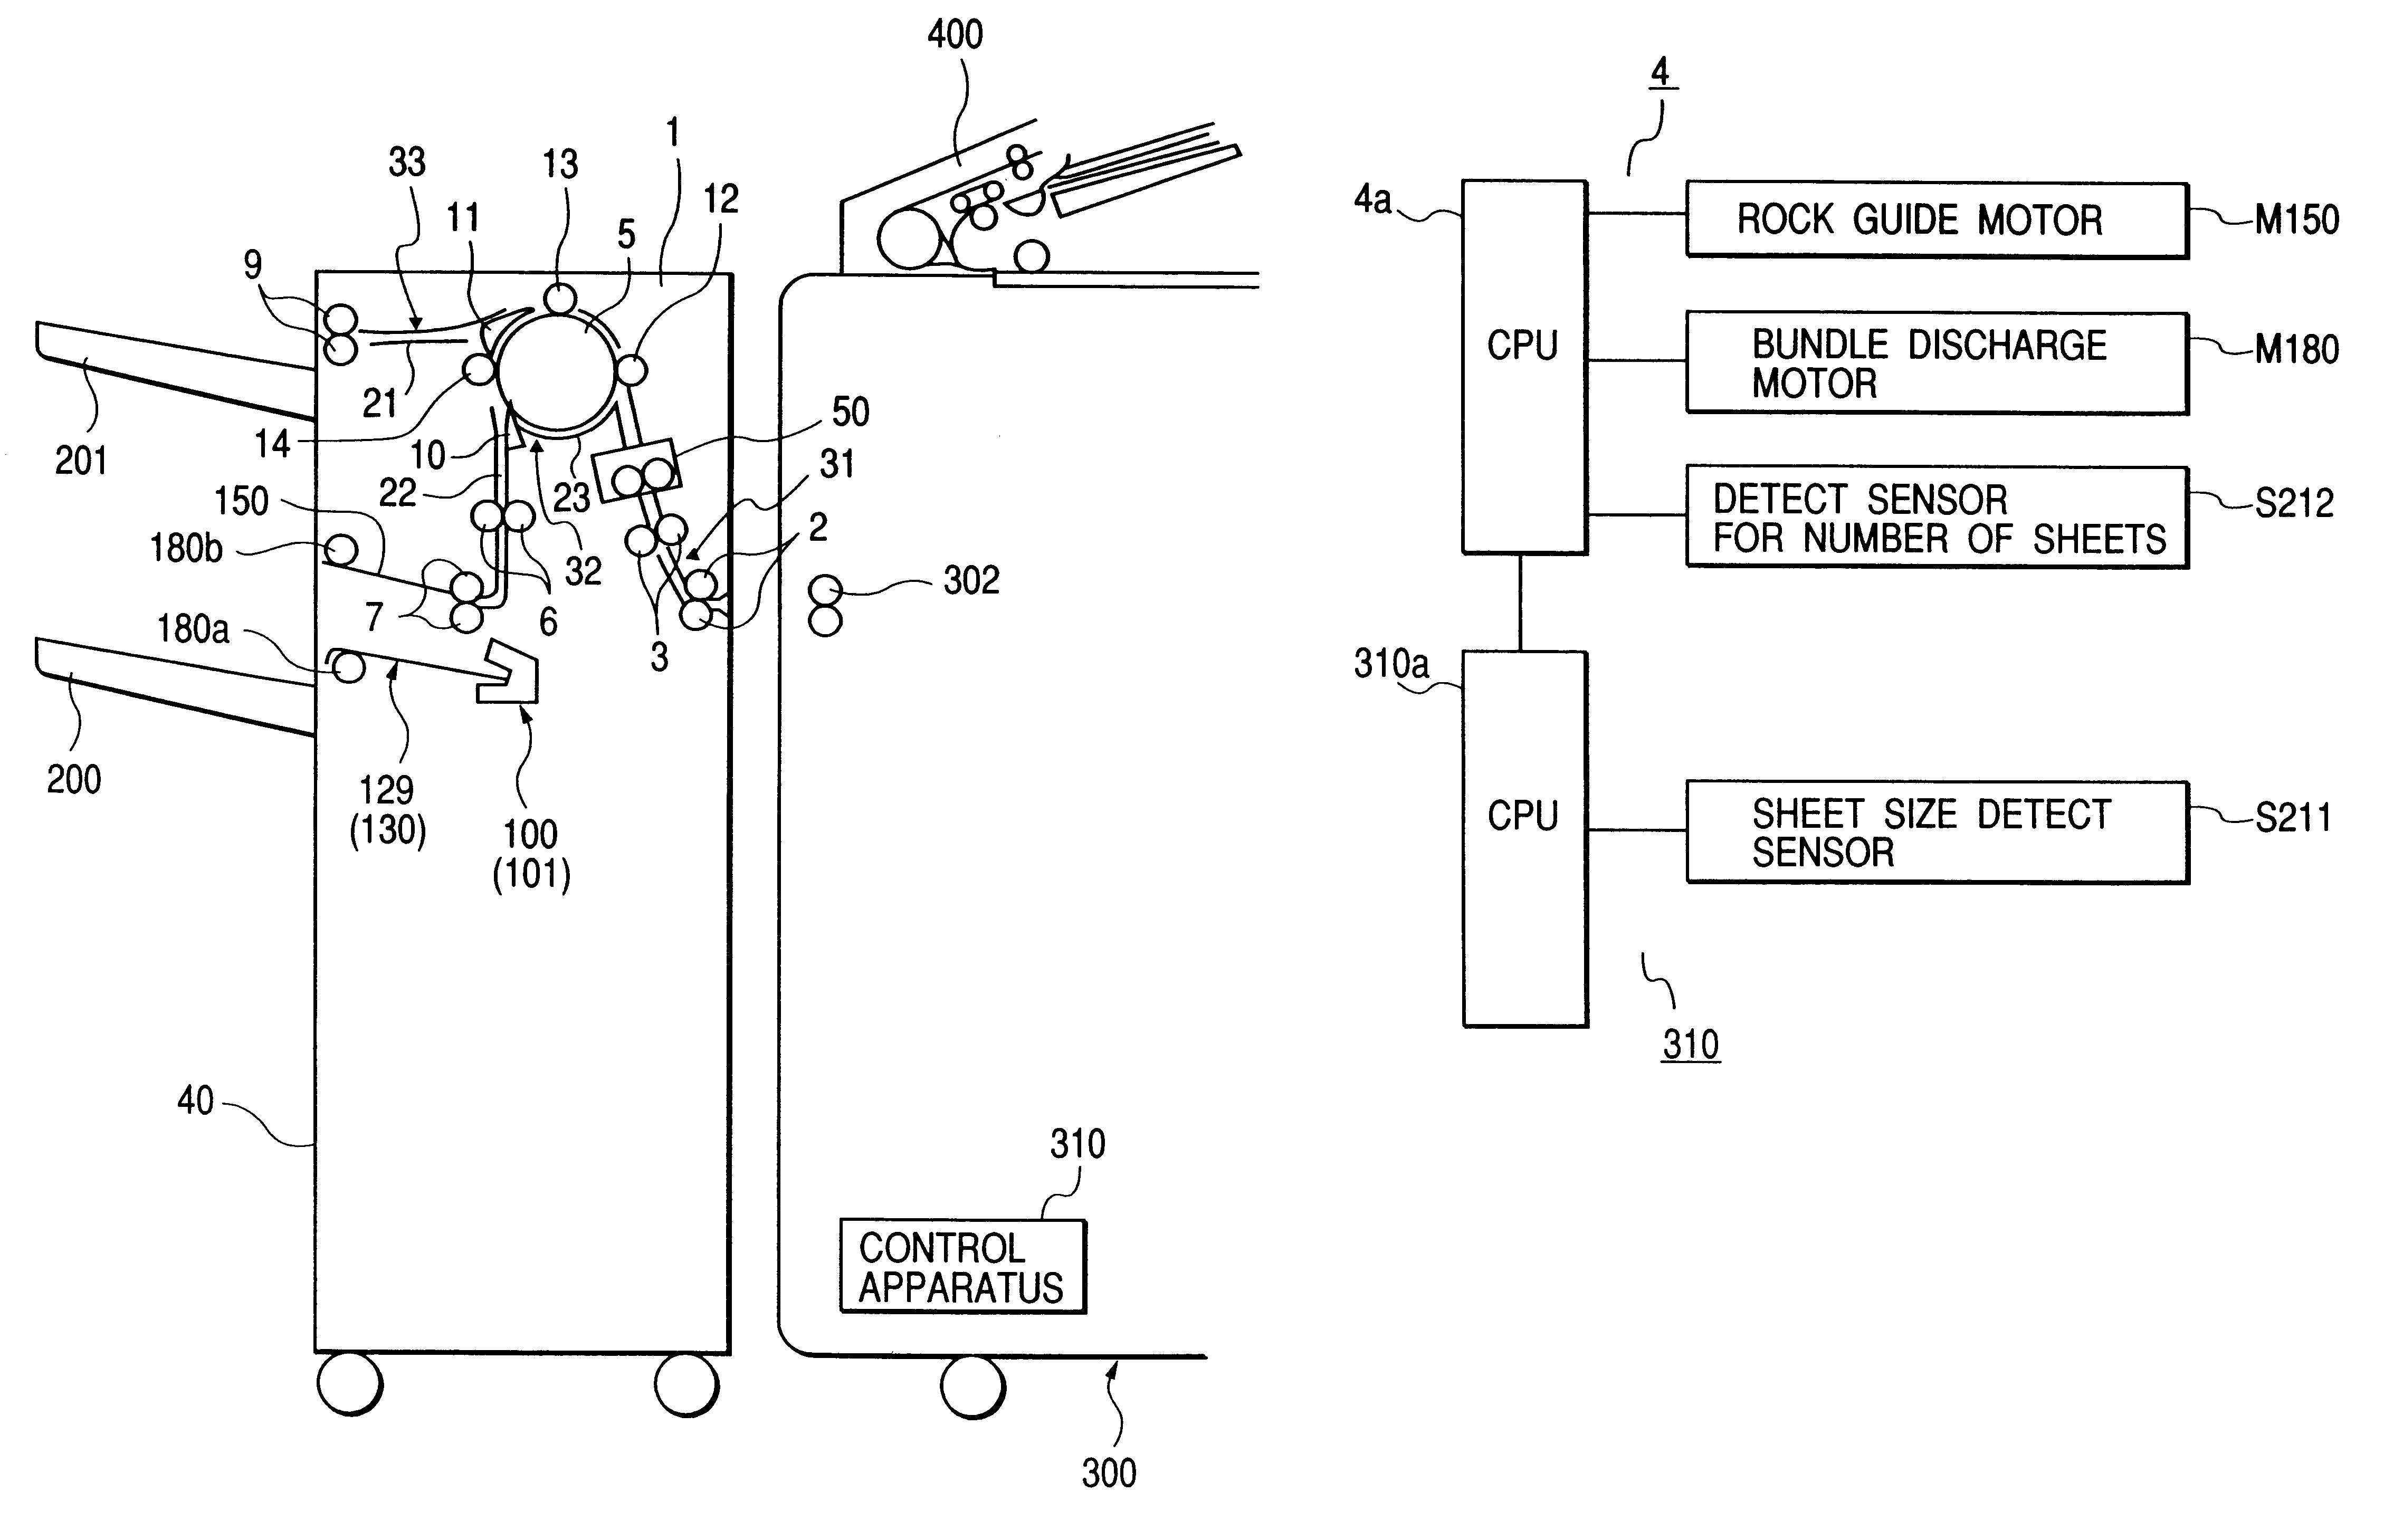 Sheet process apparatus